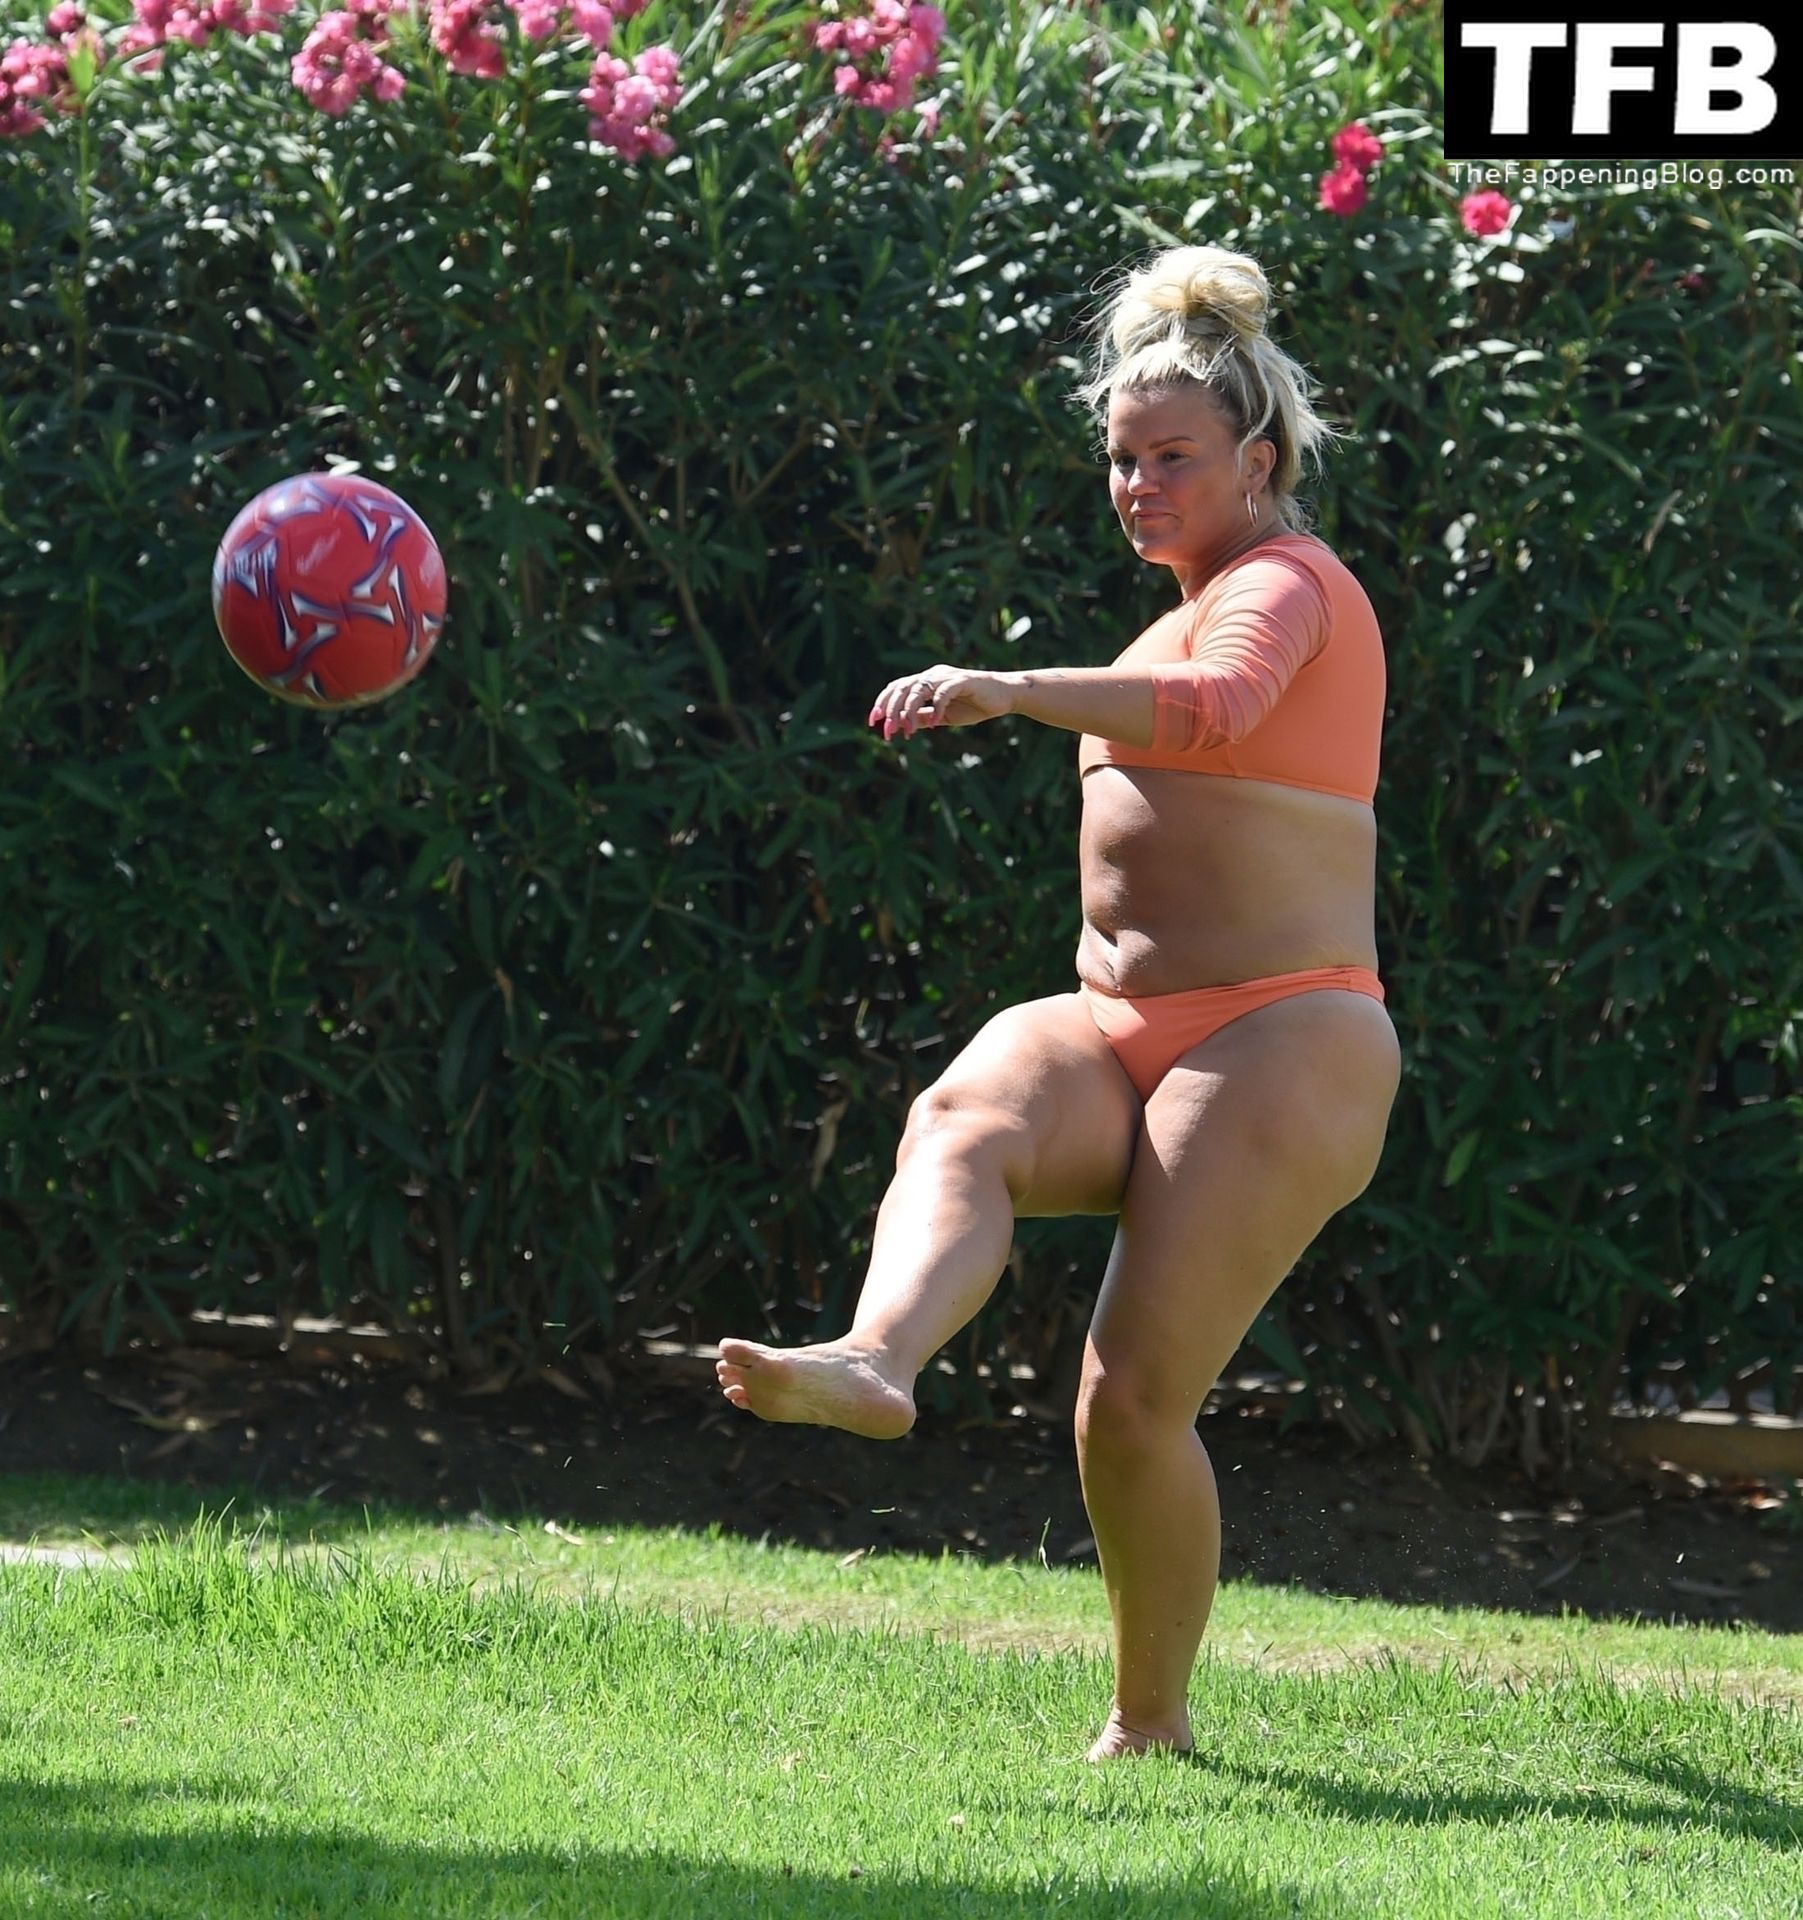 Kerry Katona Sexy 35 thefappeningblog.com  - Kerry Katona Shows Off Her Ball Skills During Her Holidays in Spain (53 Photos)